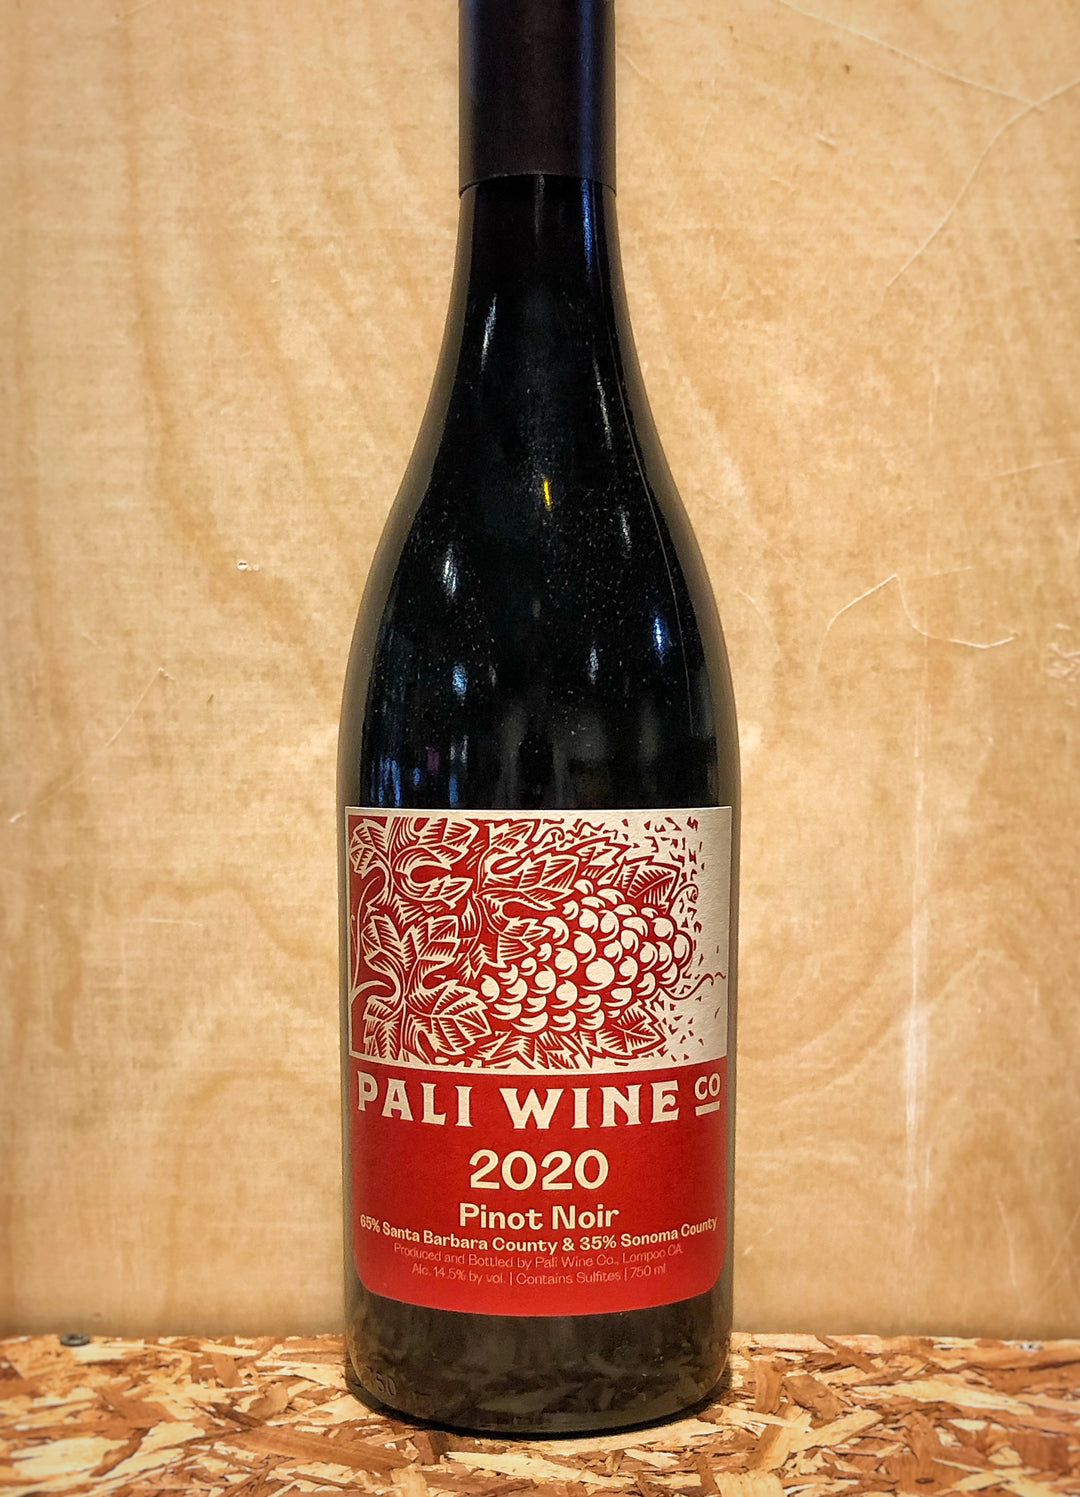 Pali Wine Co. Pinot Noir 2020 (Santa Barbara & Sonoma Coutny, California)